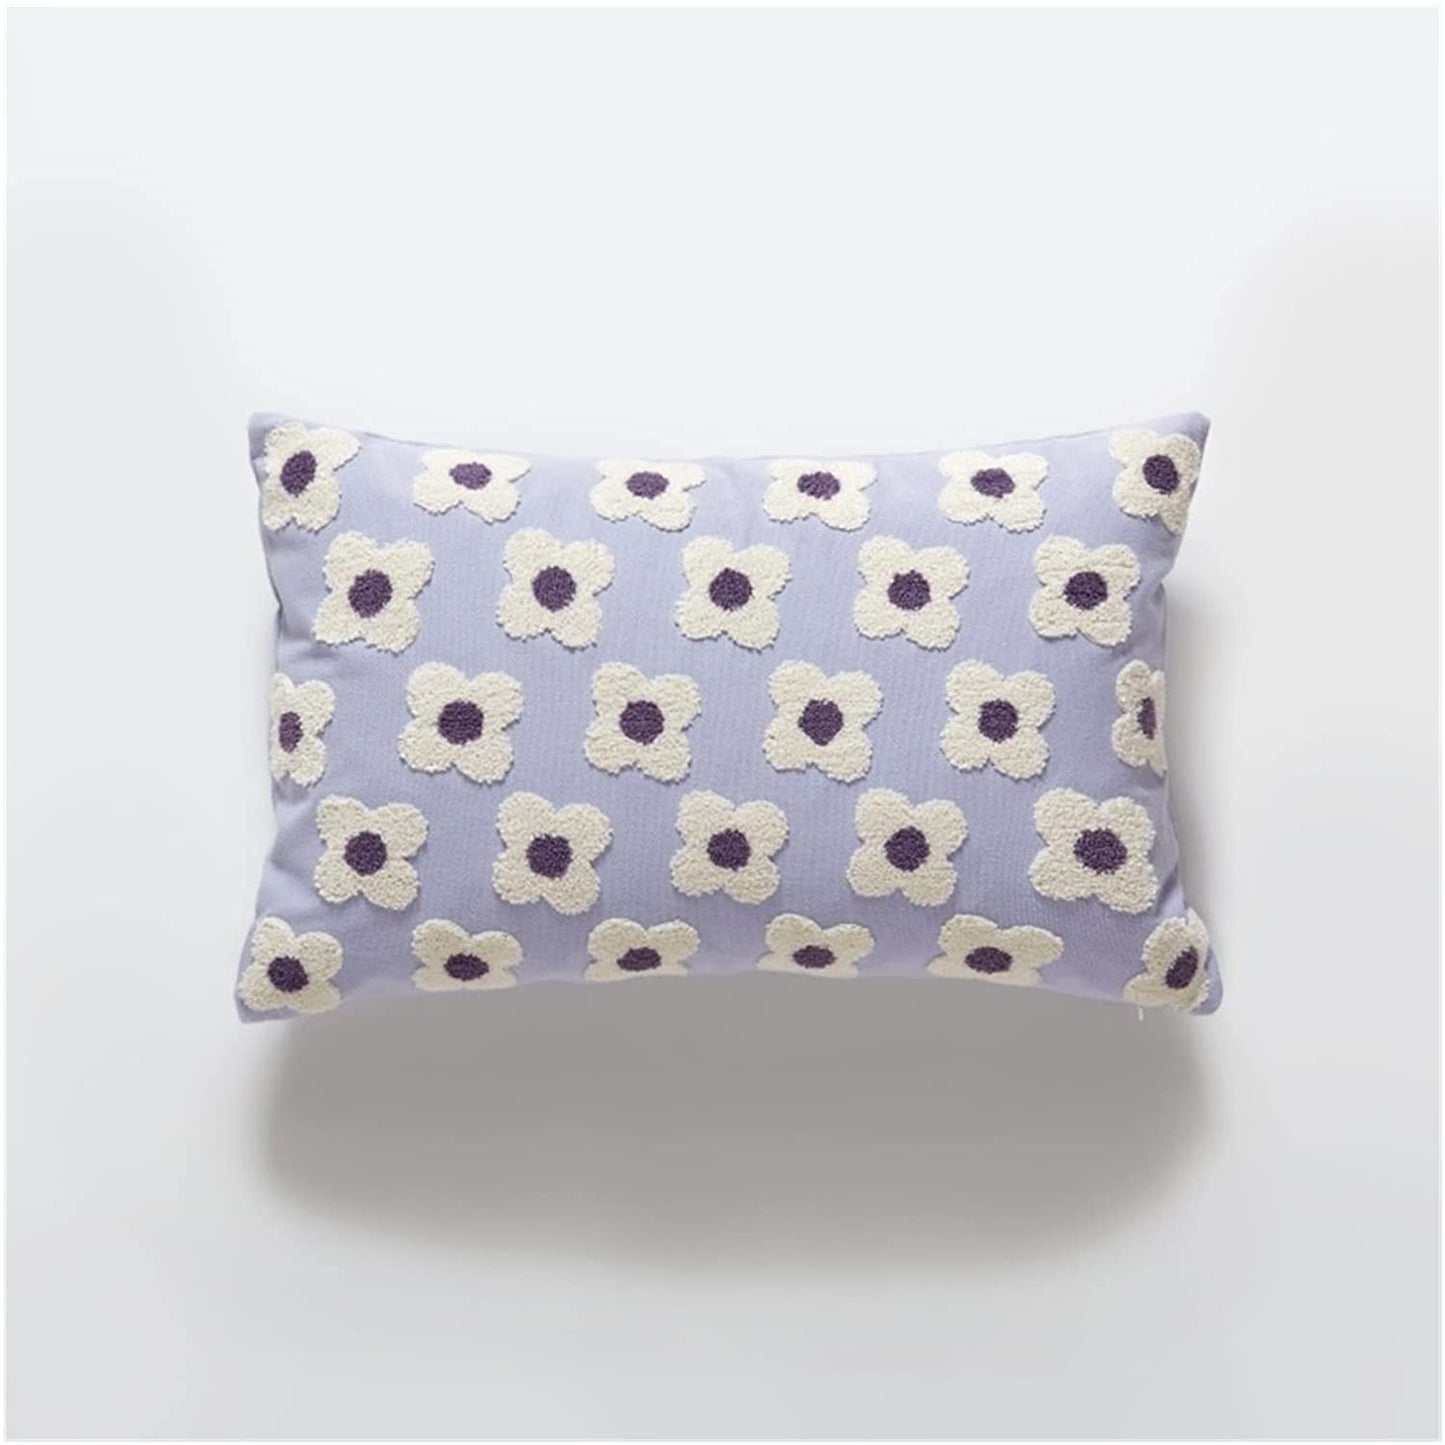 Flower Pillow Case in Lavender